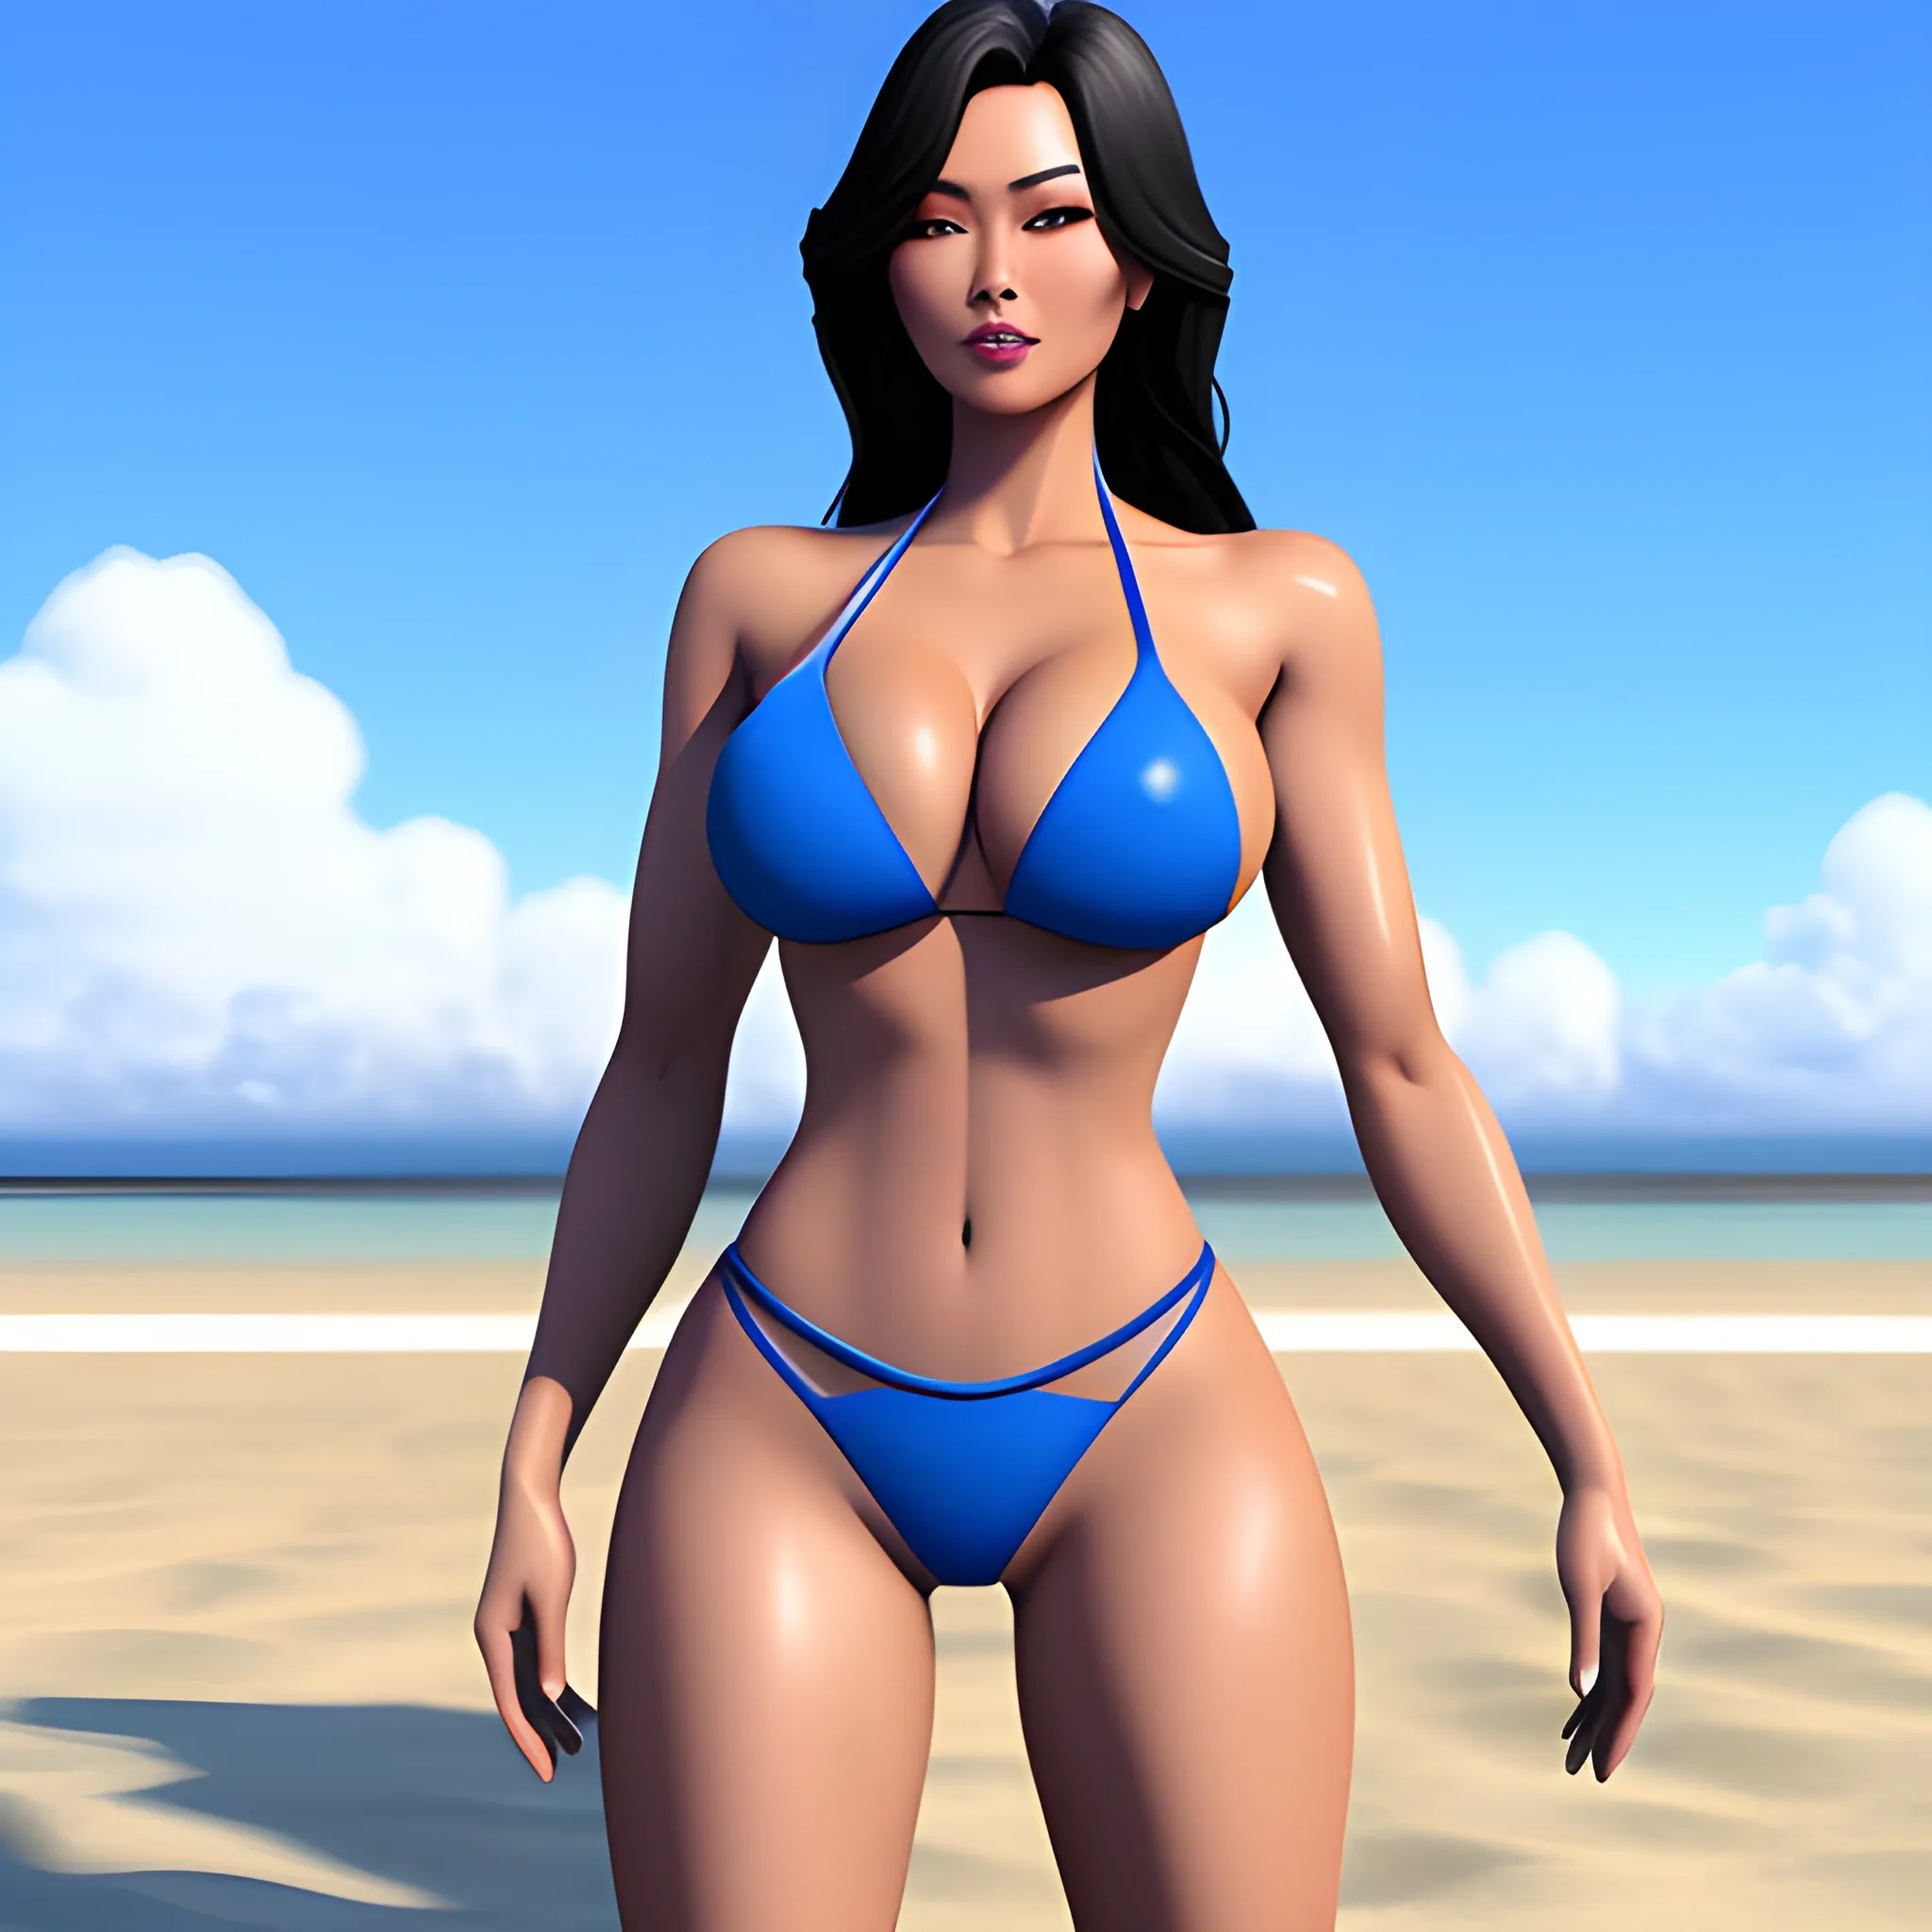 asian girl, sexy, sharp rendering, realistic, military, 3D, fullbody, young, hot, more realistic, beach, blue bikini, happy, 4k, 
, Cartoon